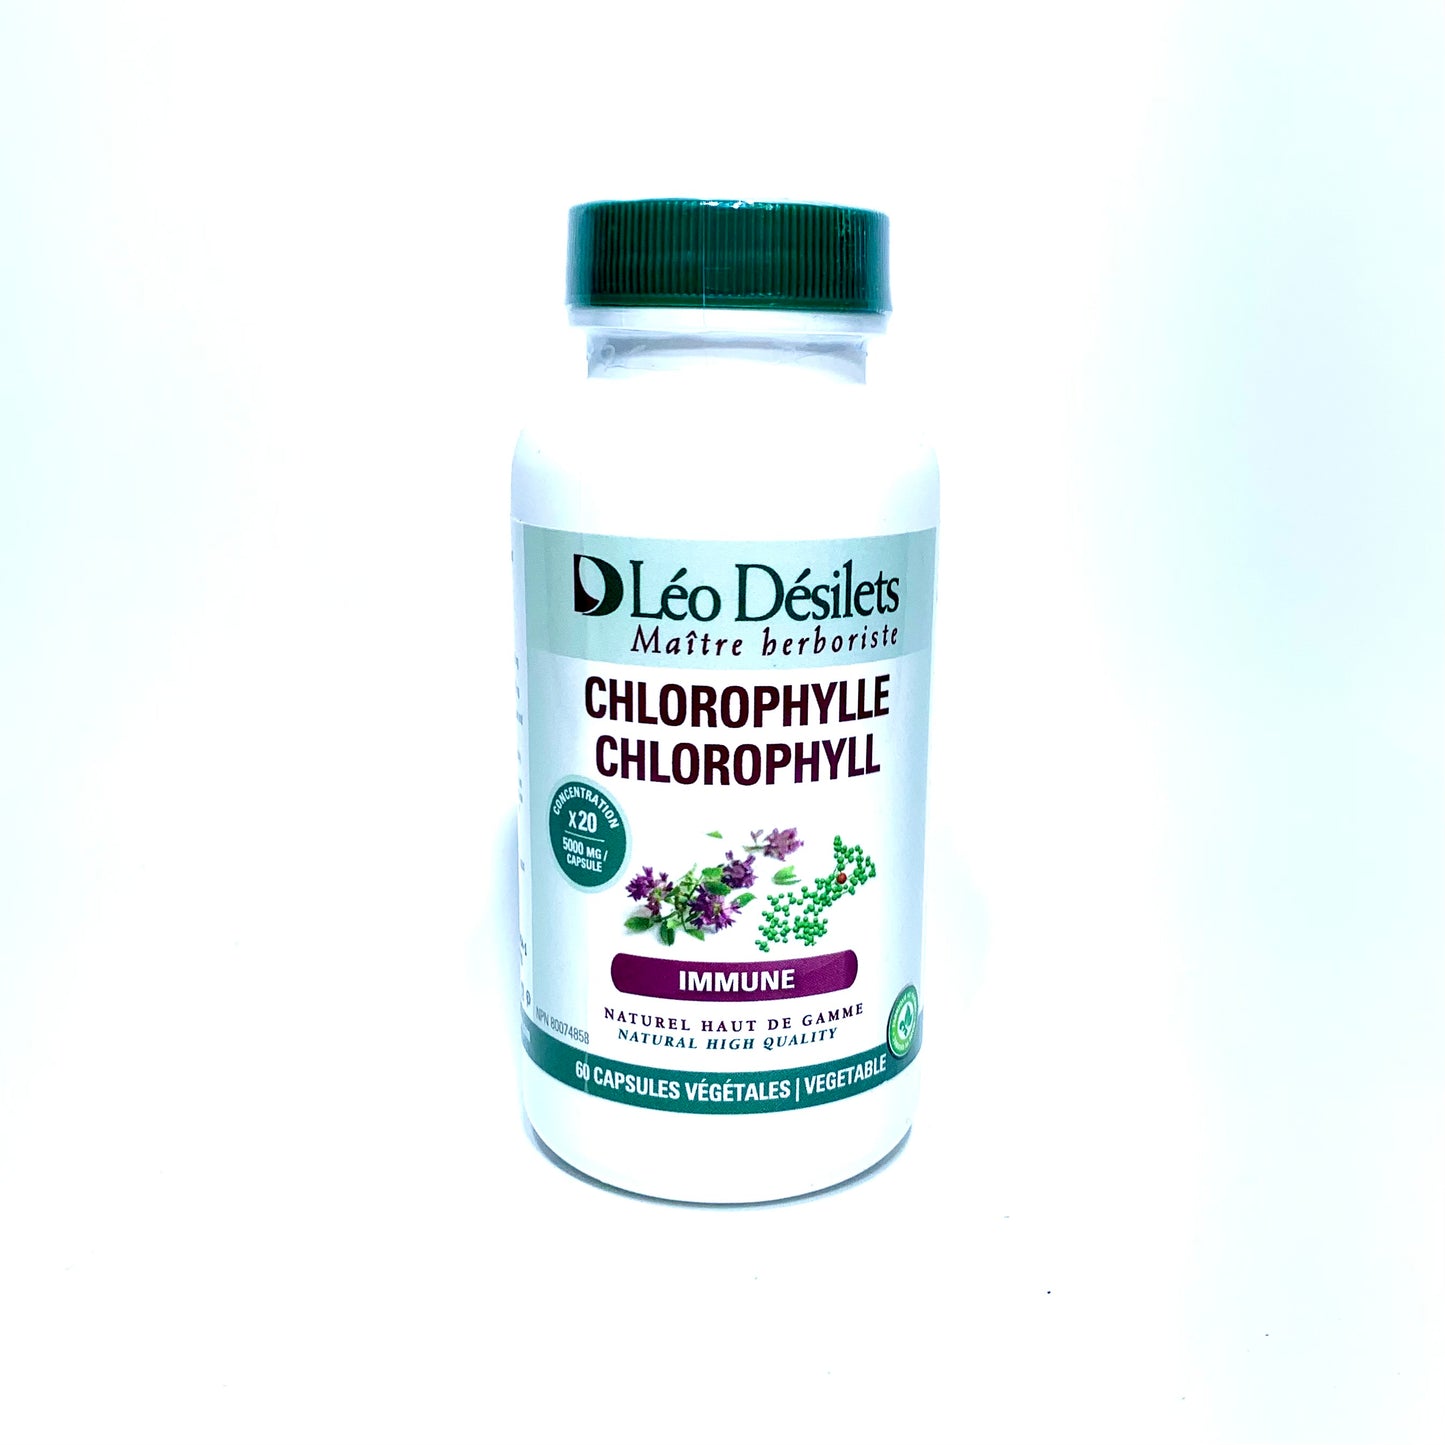 Chlorophyll capsules